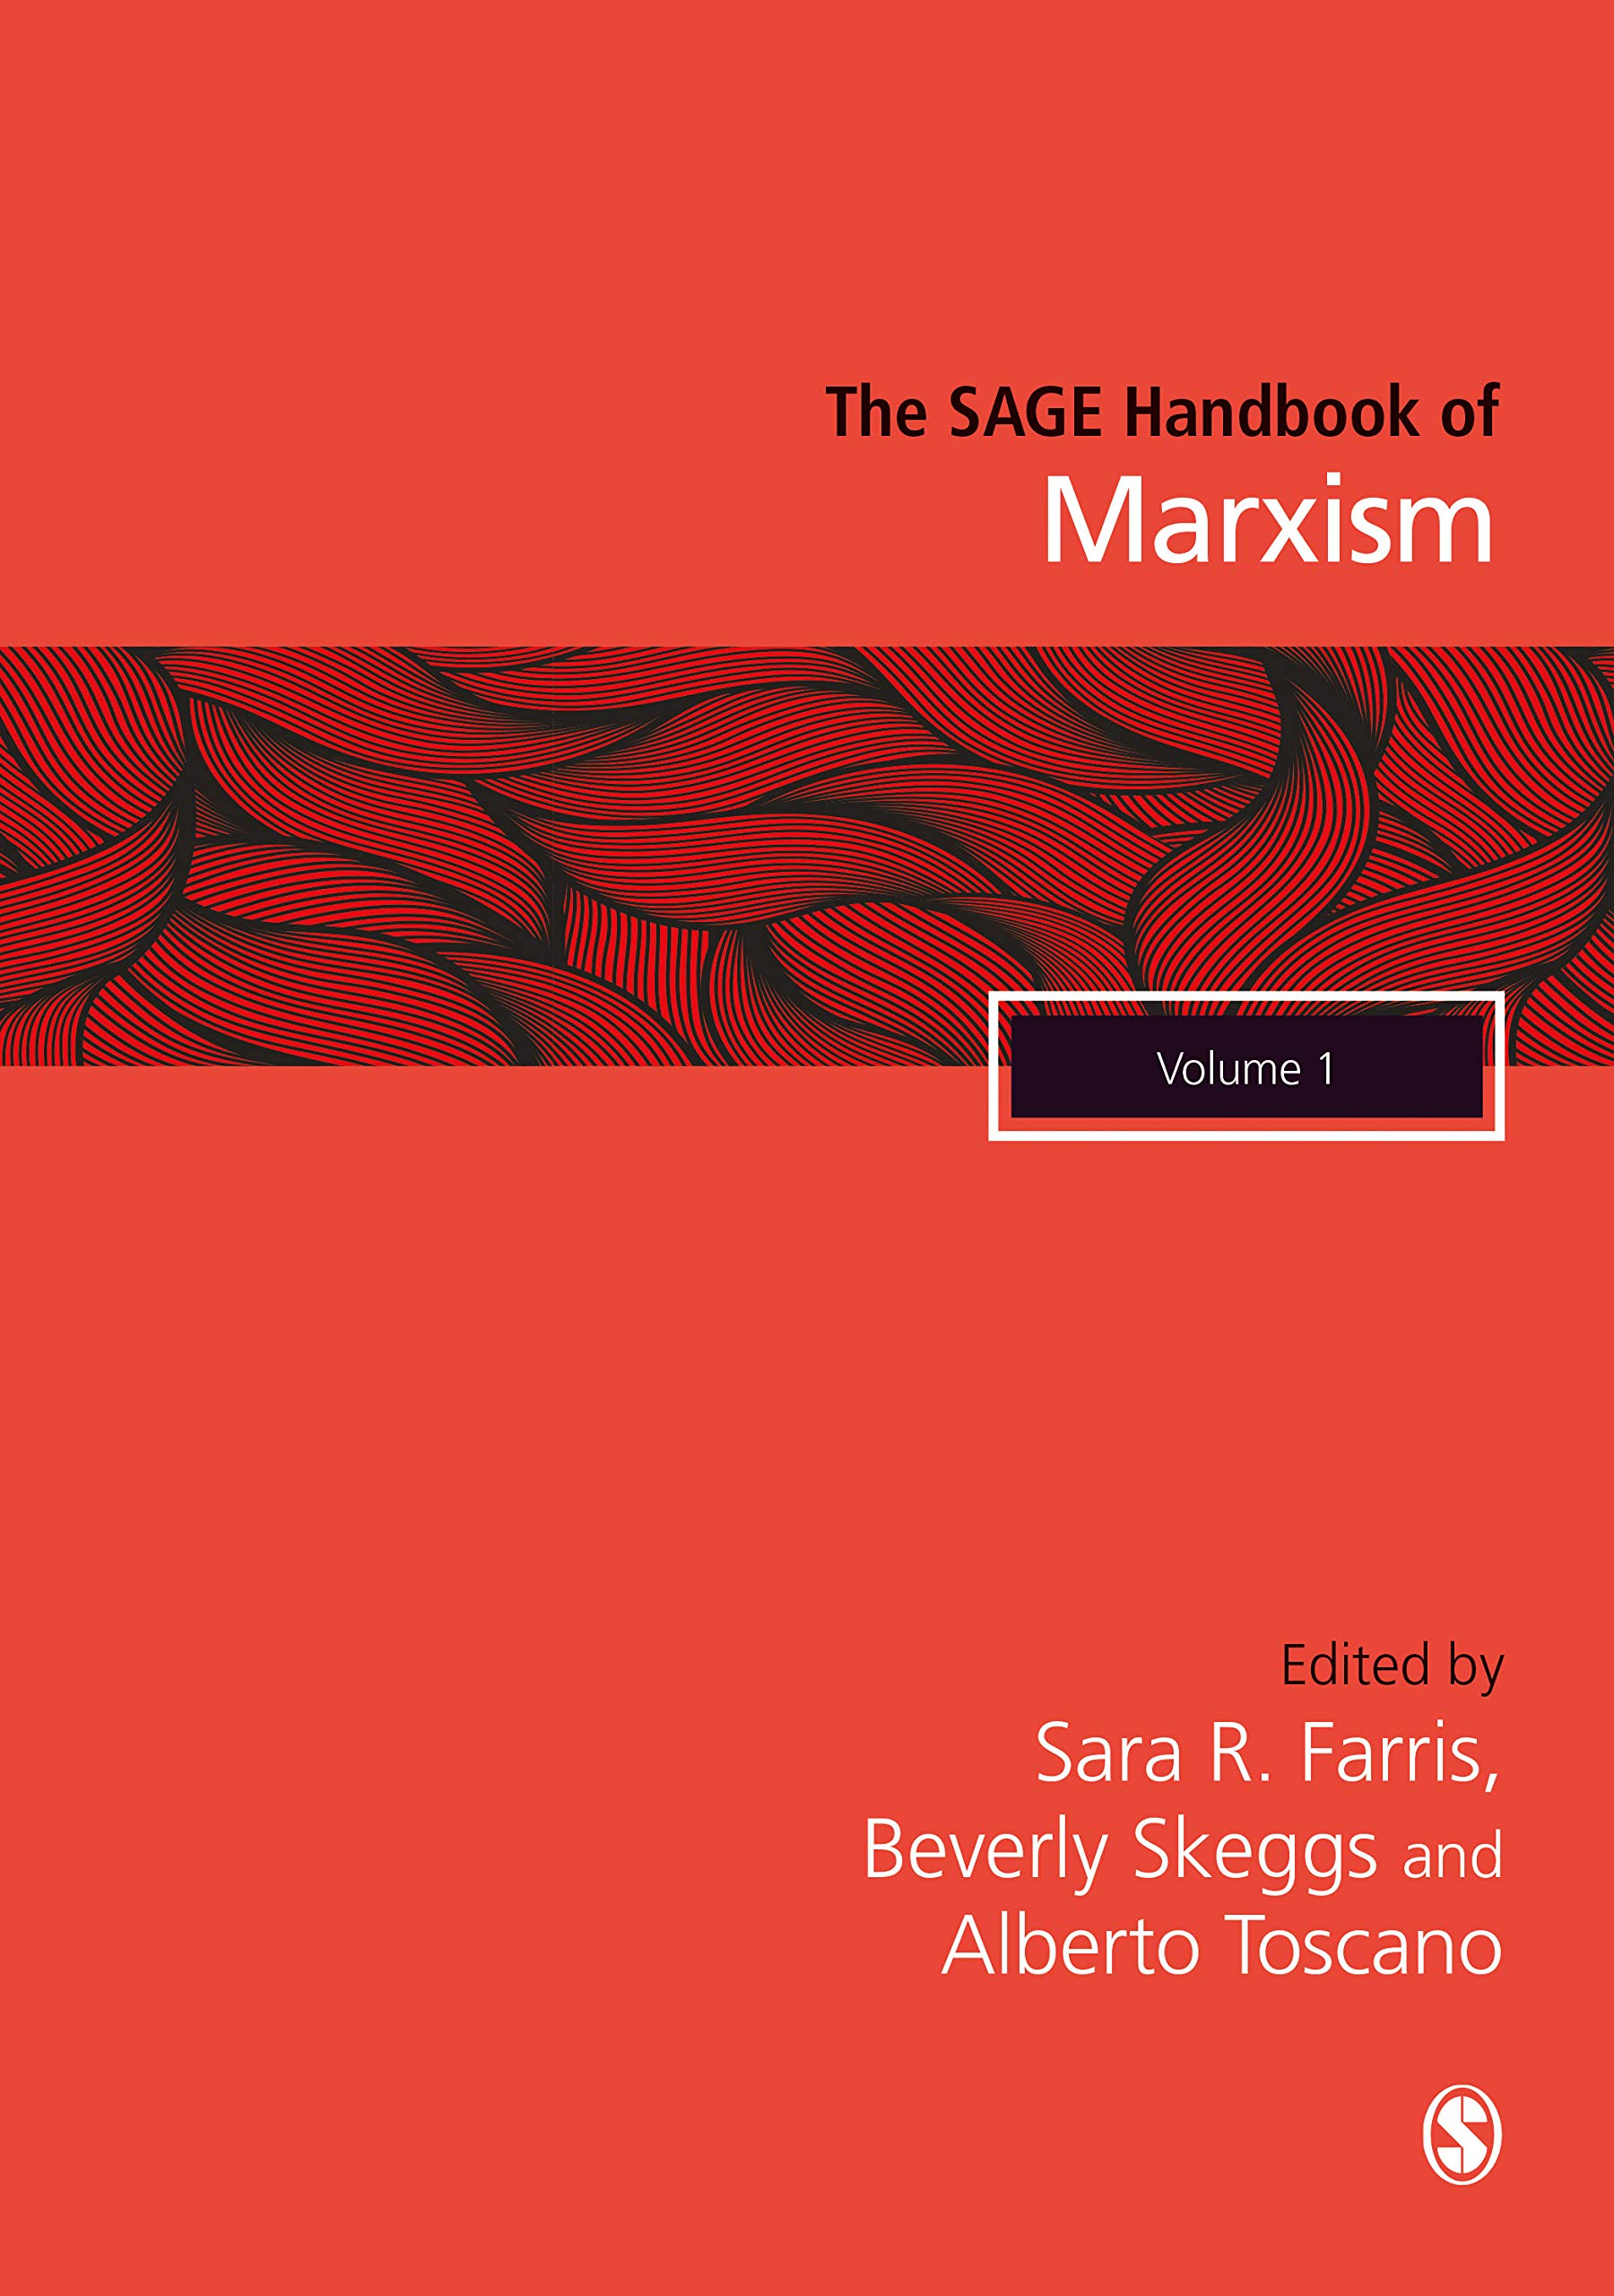 "The SAGE Handbook of Marxism" book cover.